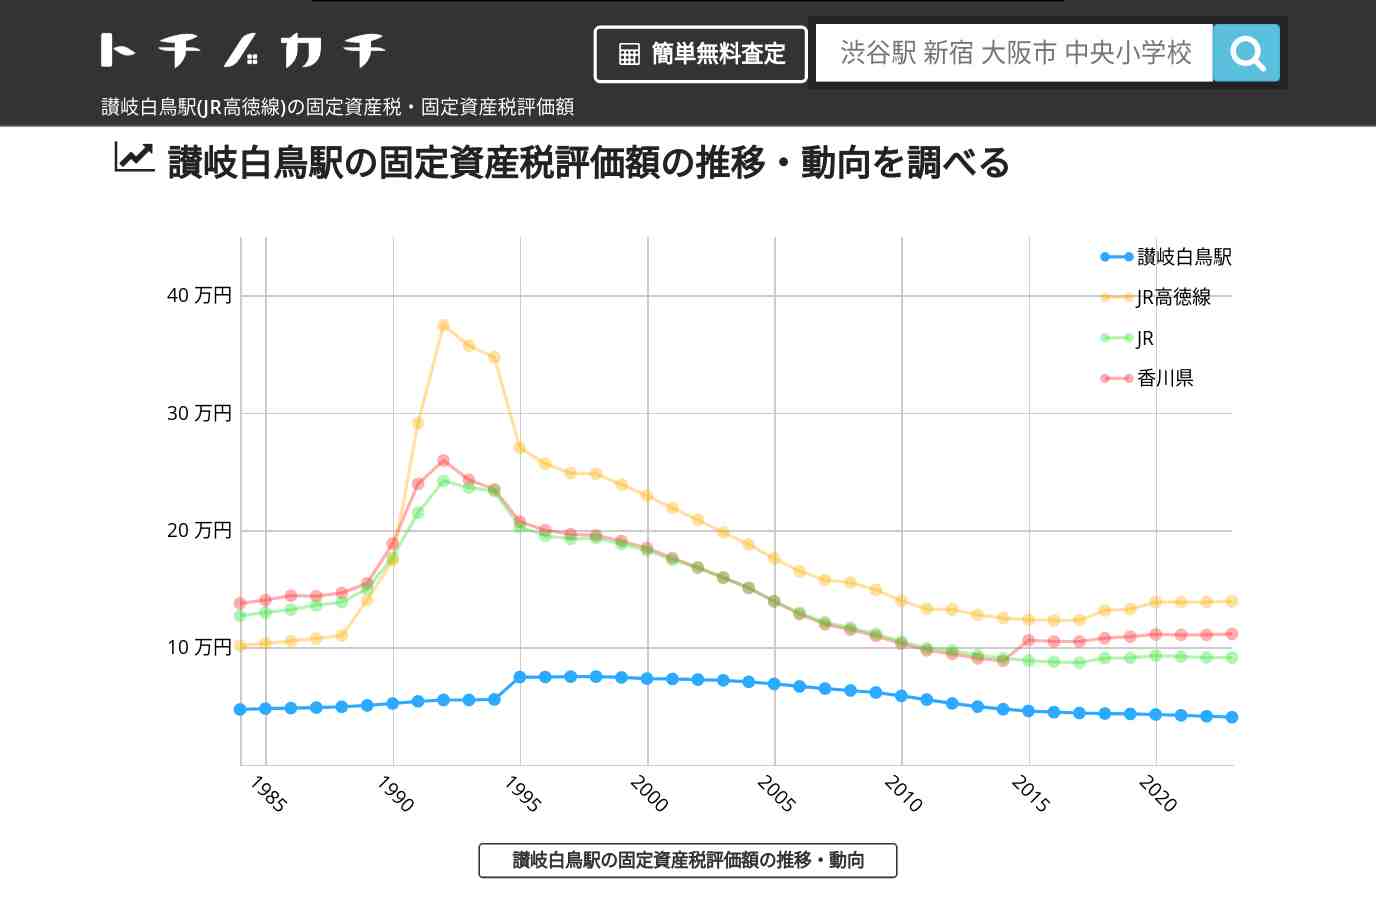 讃岐白鳥駅(JR高徳線)の固定資産税・固定資産税評価額 | トチノカチ